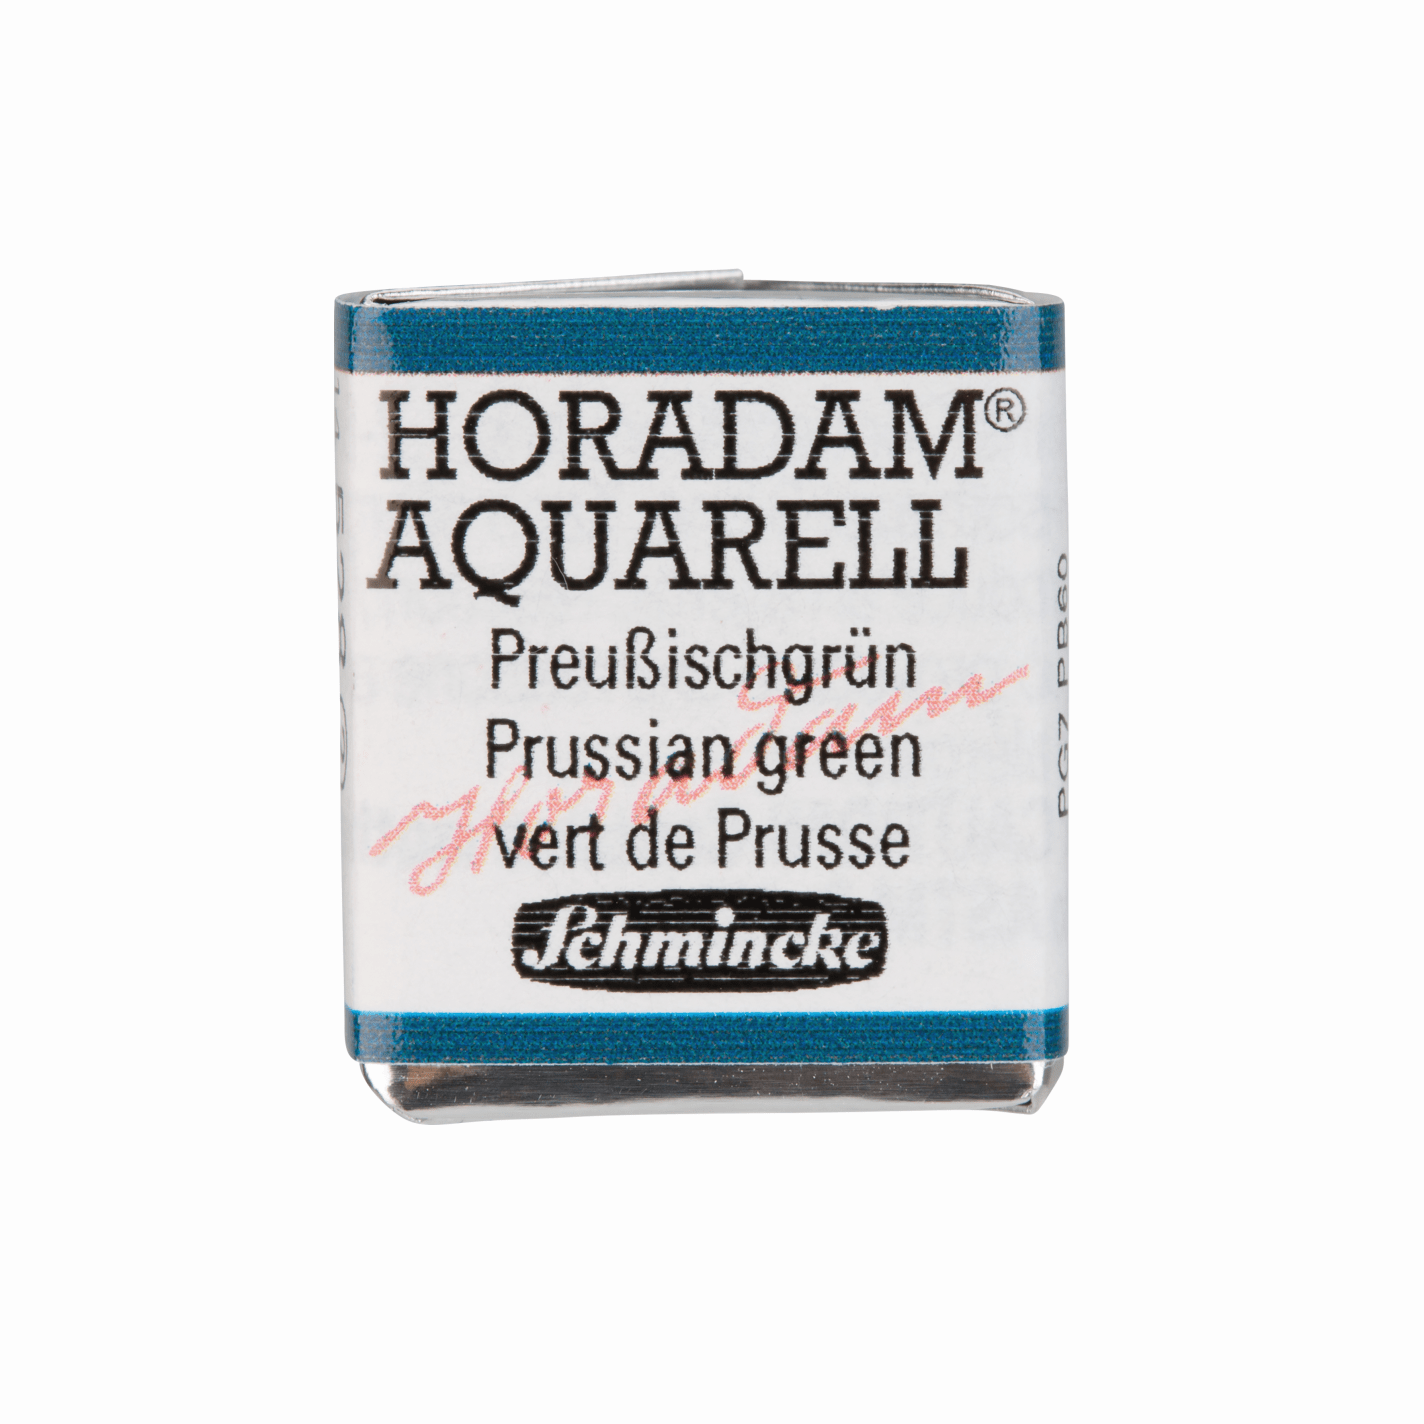 Schmincke Horadam Aquarell pans 1/2 pan Prussian Green